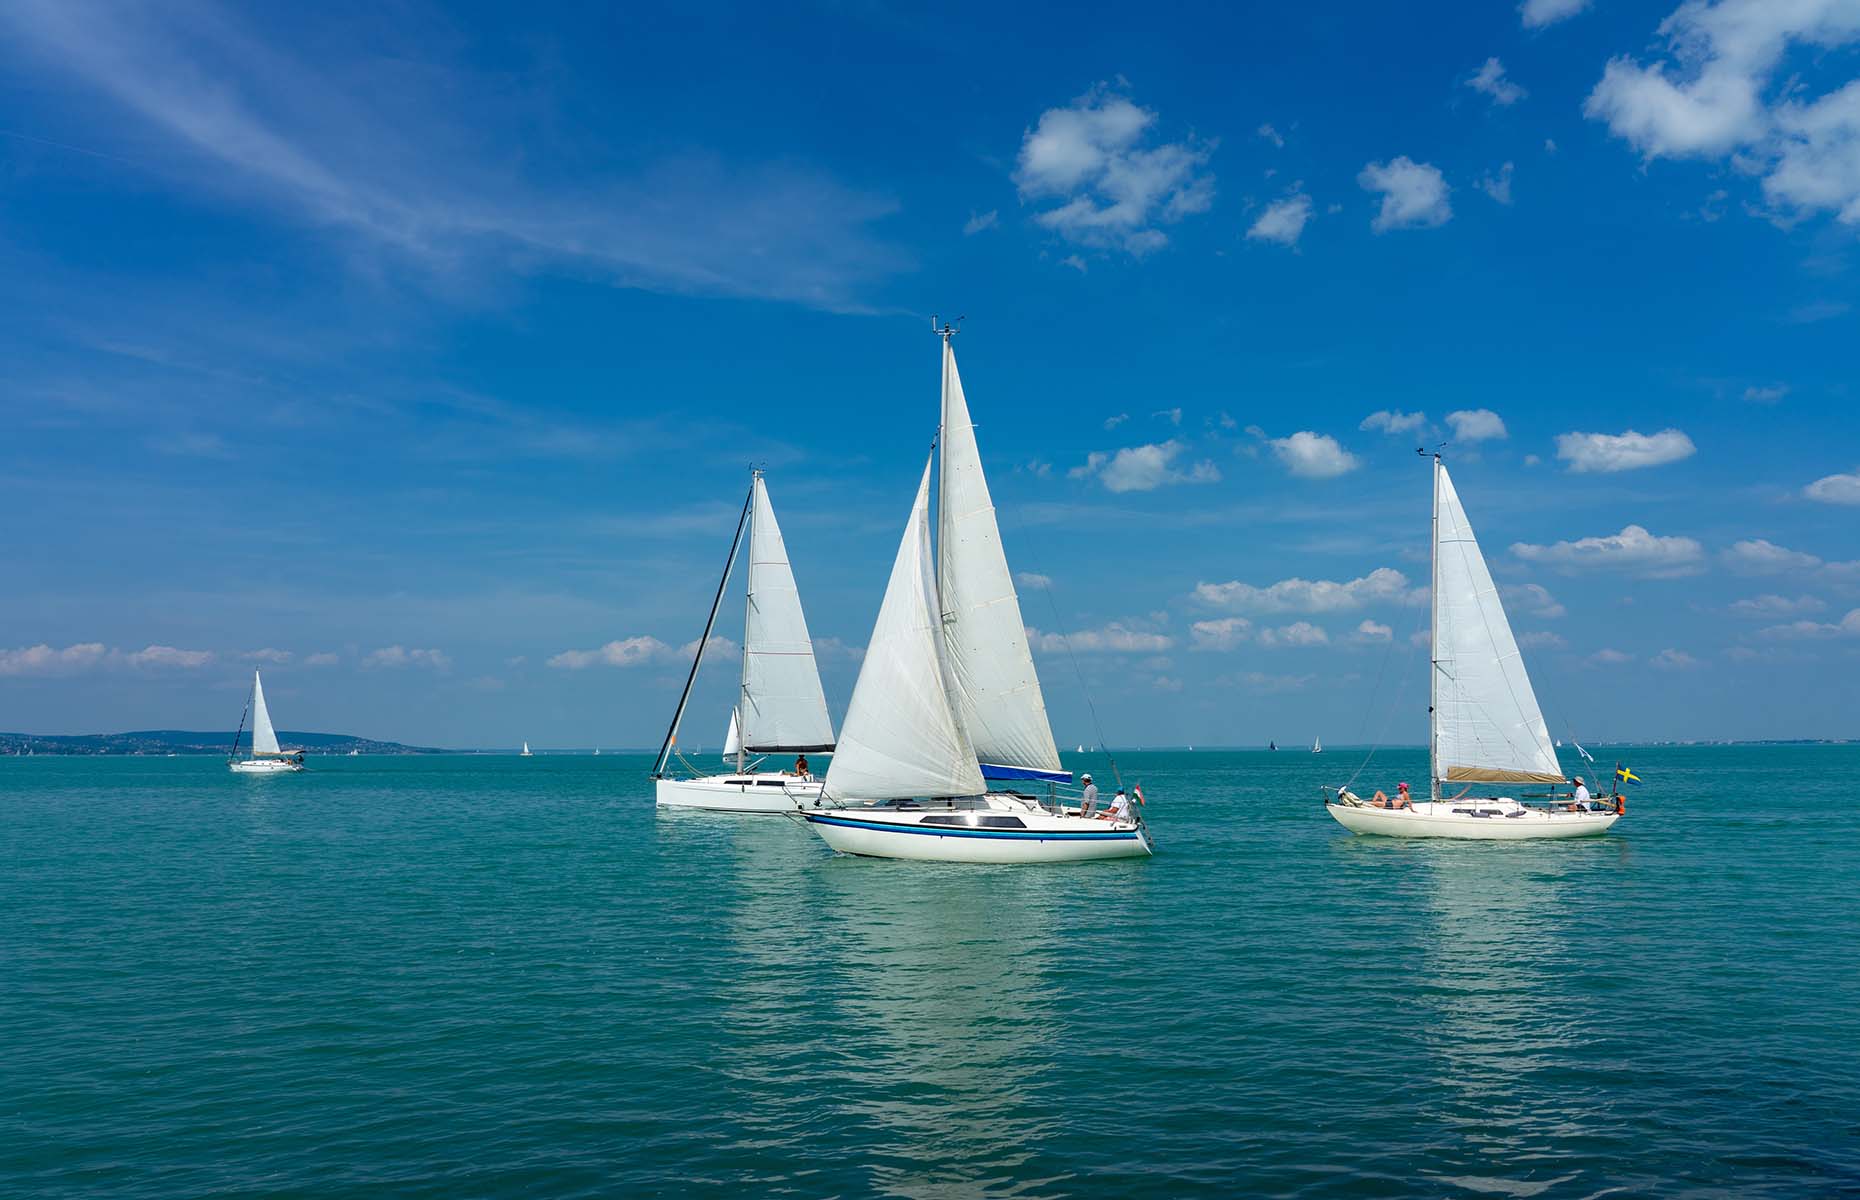 Sailing in Lake Balaton, Hungary (Image: berni0004/Shutterstock)